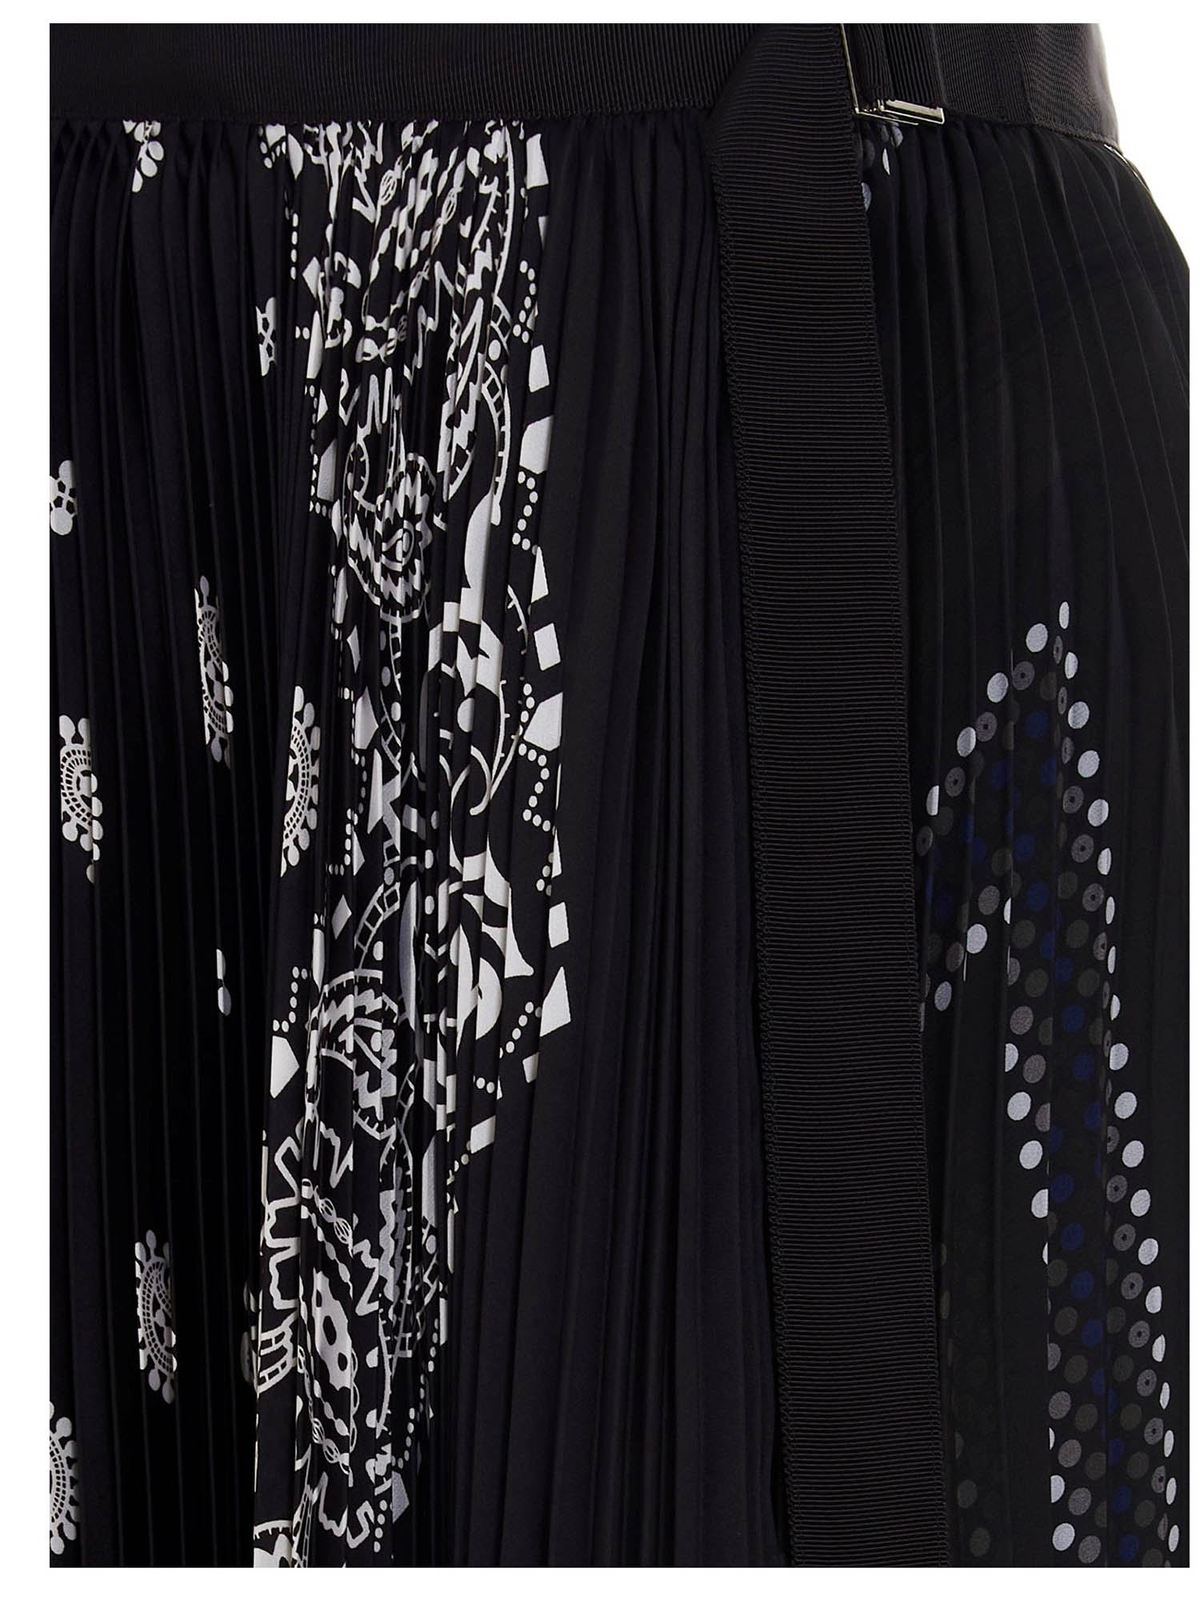 Bandana printed skirt in black